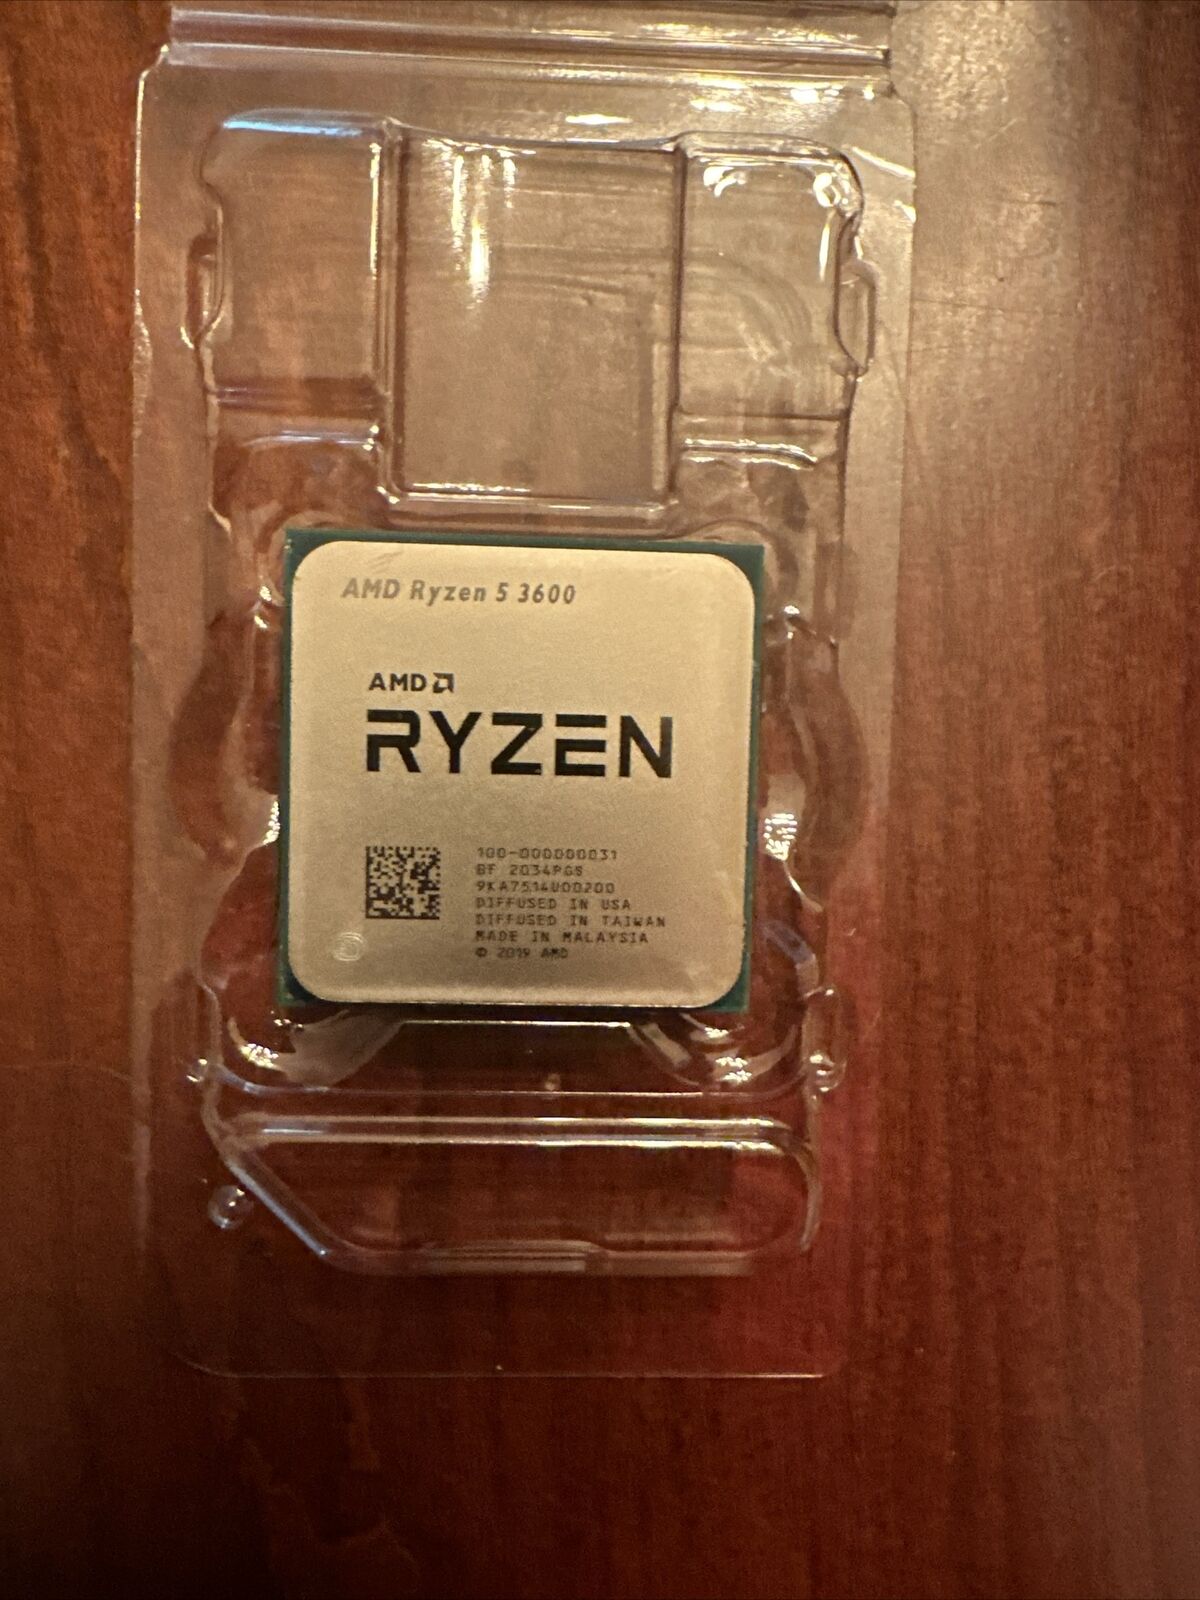 AMD Ryzen 5 3600 Processor (3.6GHz, 6 Cores, Socket AM4) - 100-100000031BOX